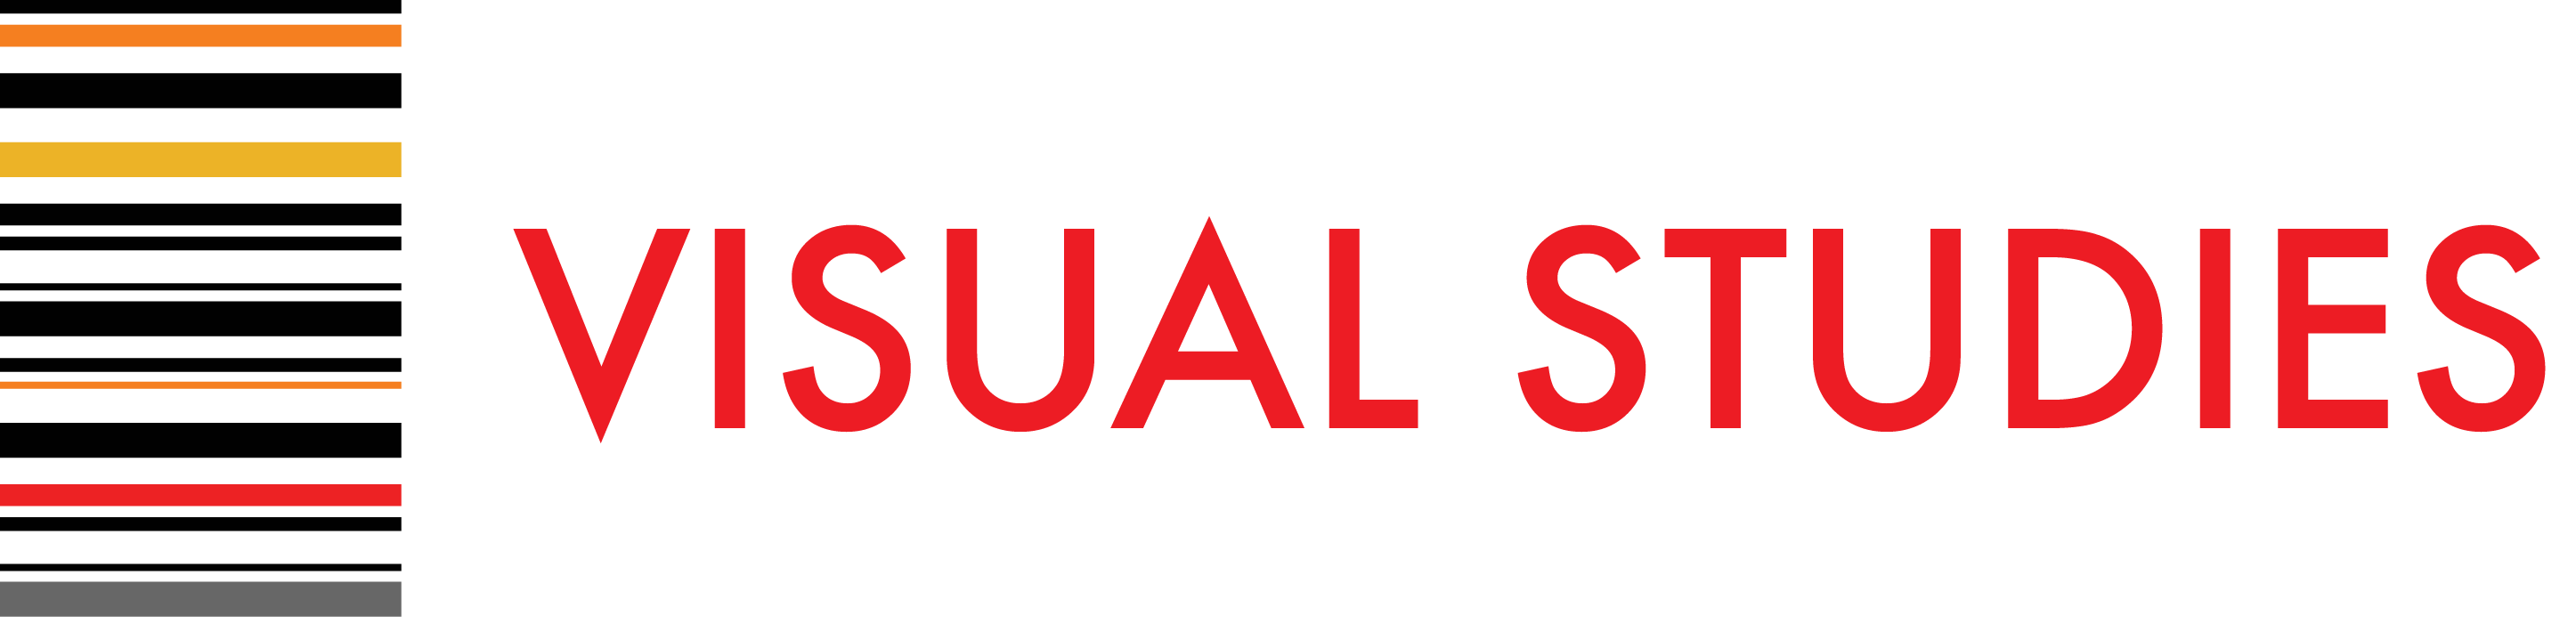 Art, Art History & Visual Studies Logo